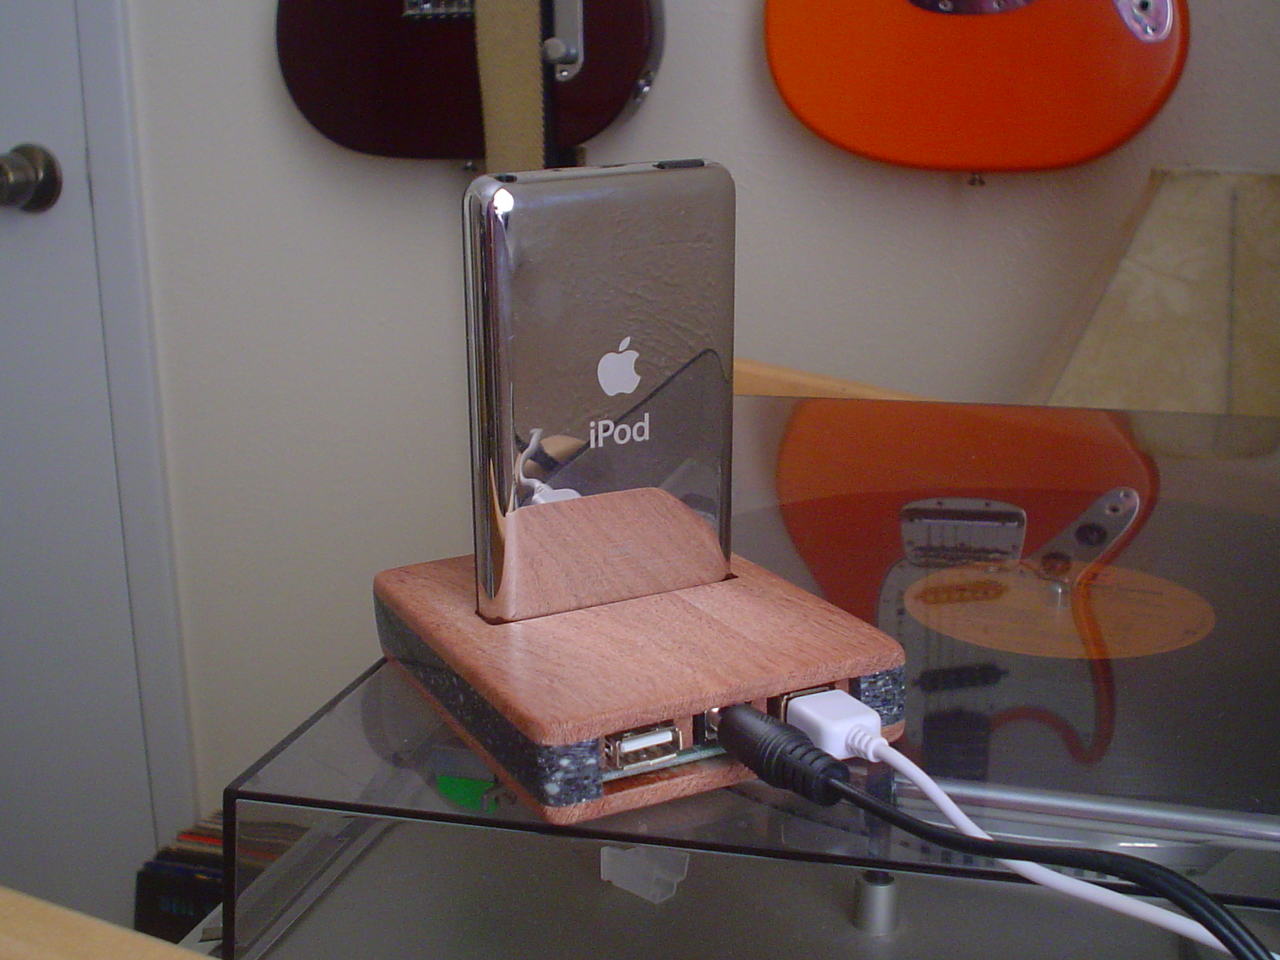 iPod Base Dock Charger